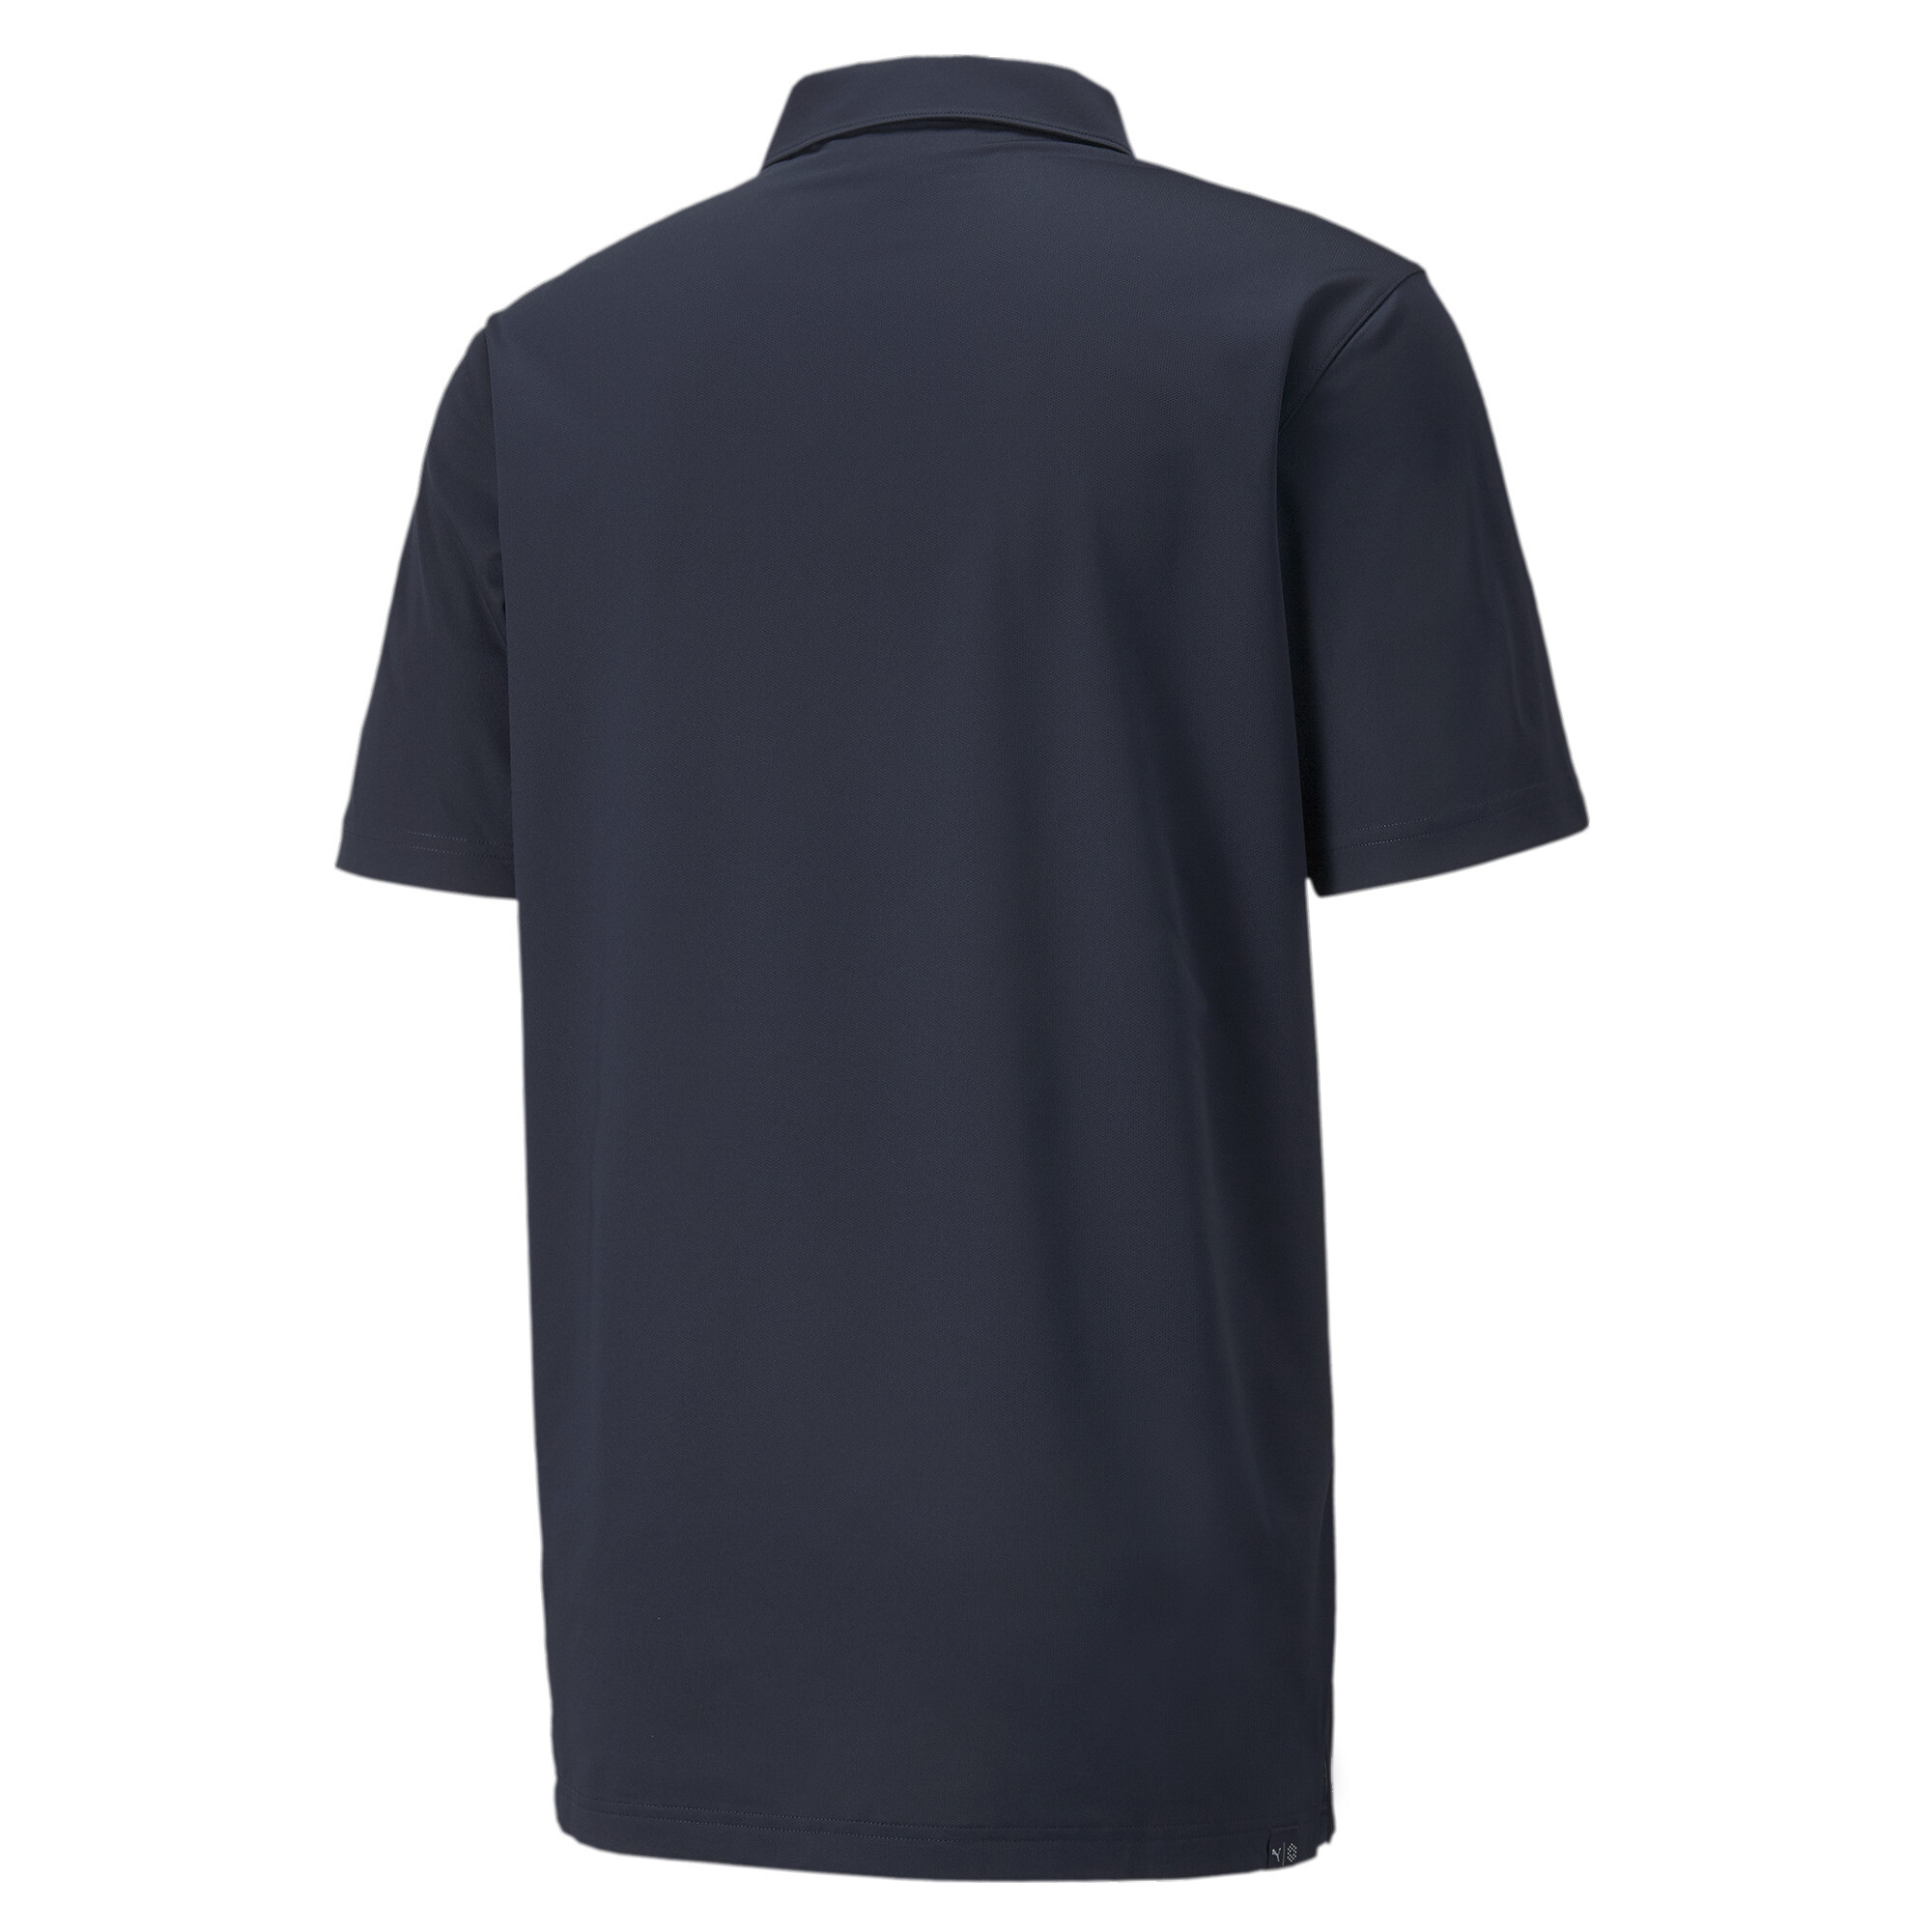 Men's Puma Gamer's Golf Polo Shirt T-Shirt, Blue T-Shirt, Size XXL T-Shirt, Clothing